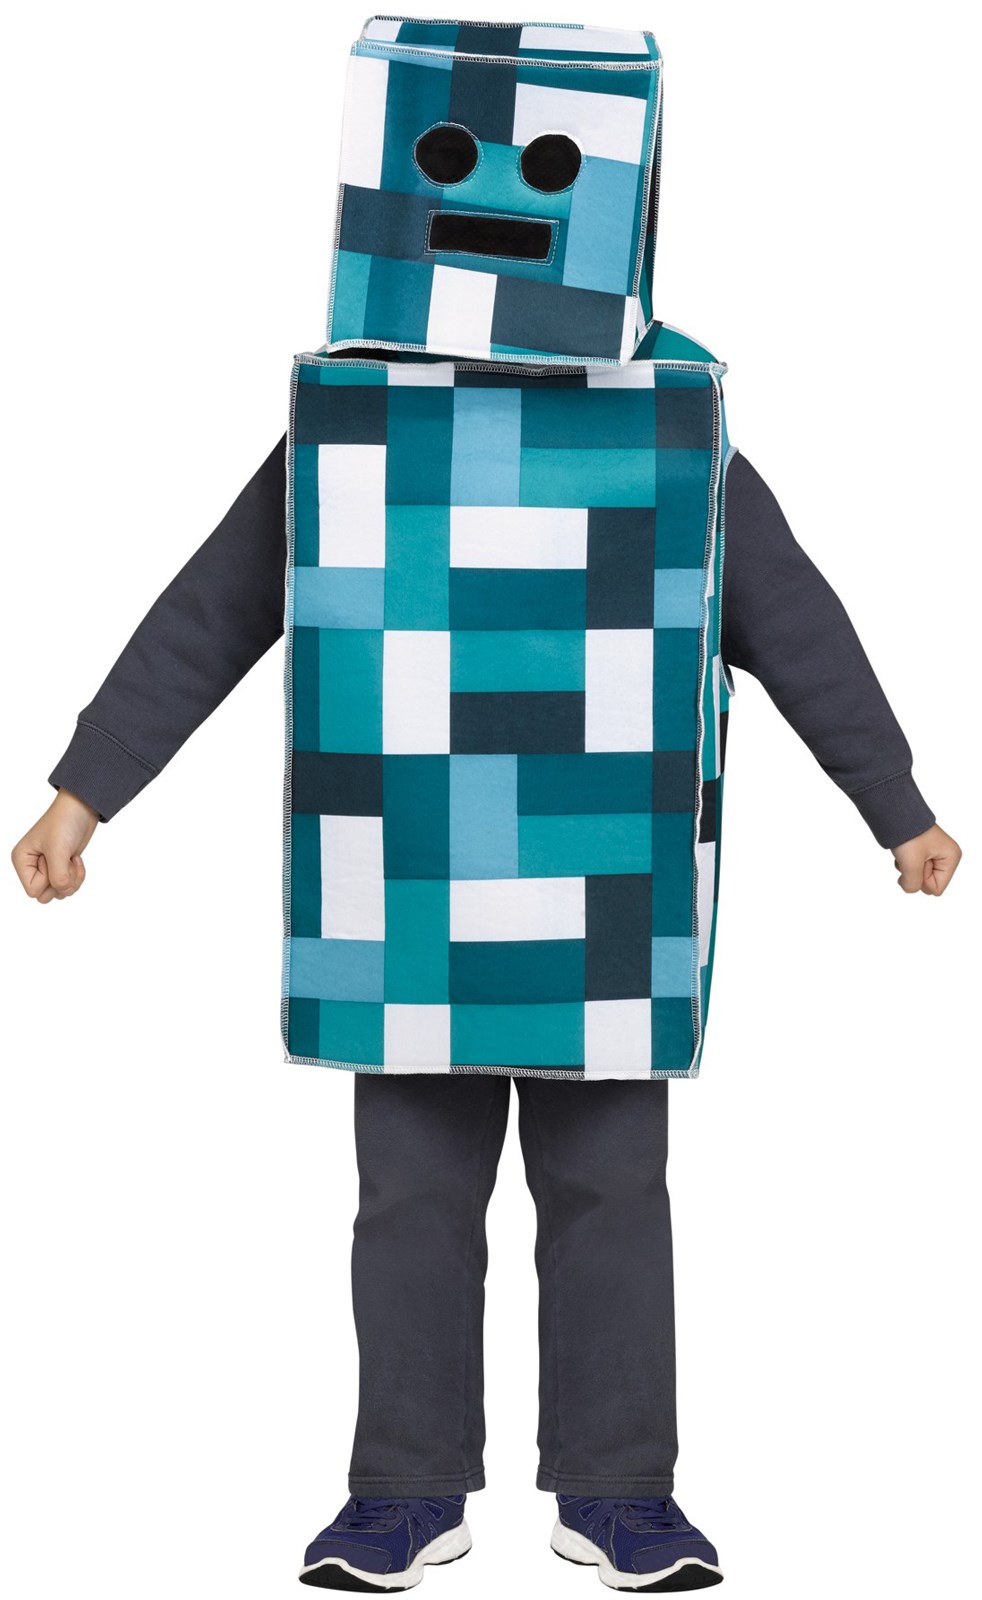 Blue Pixel Robot Costume For Kids